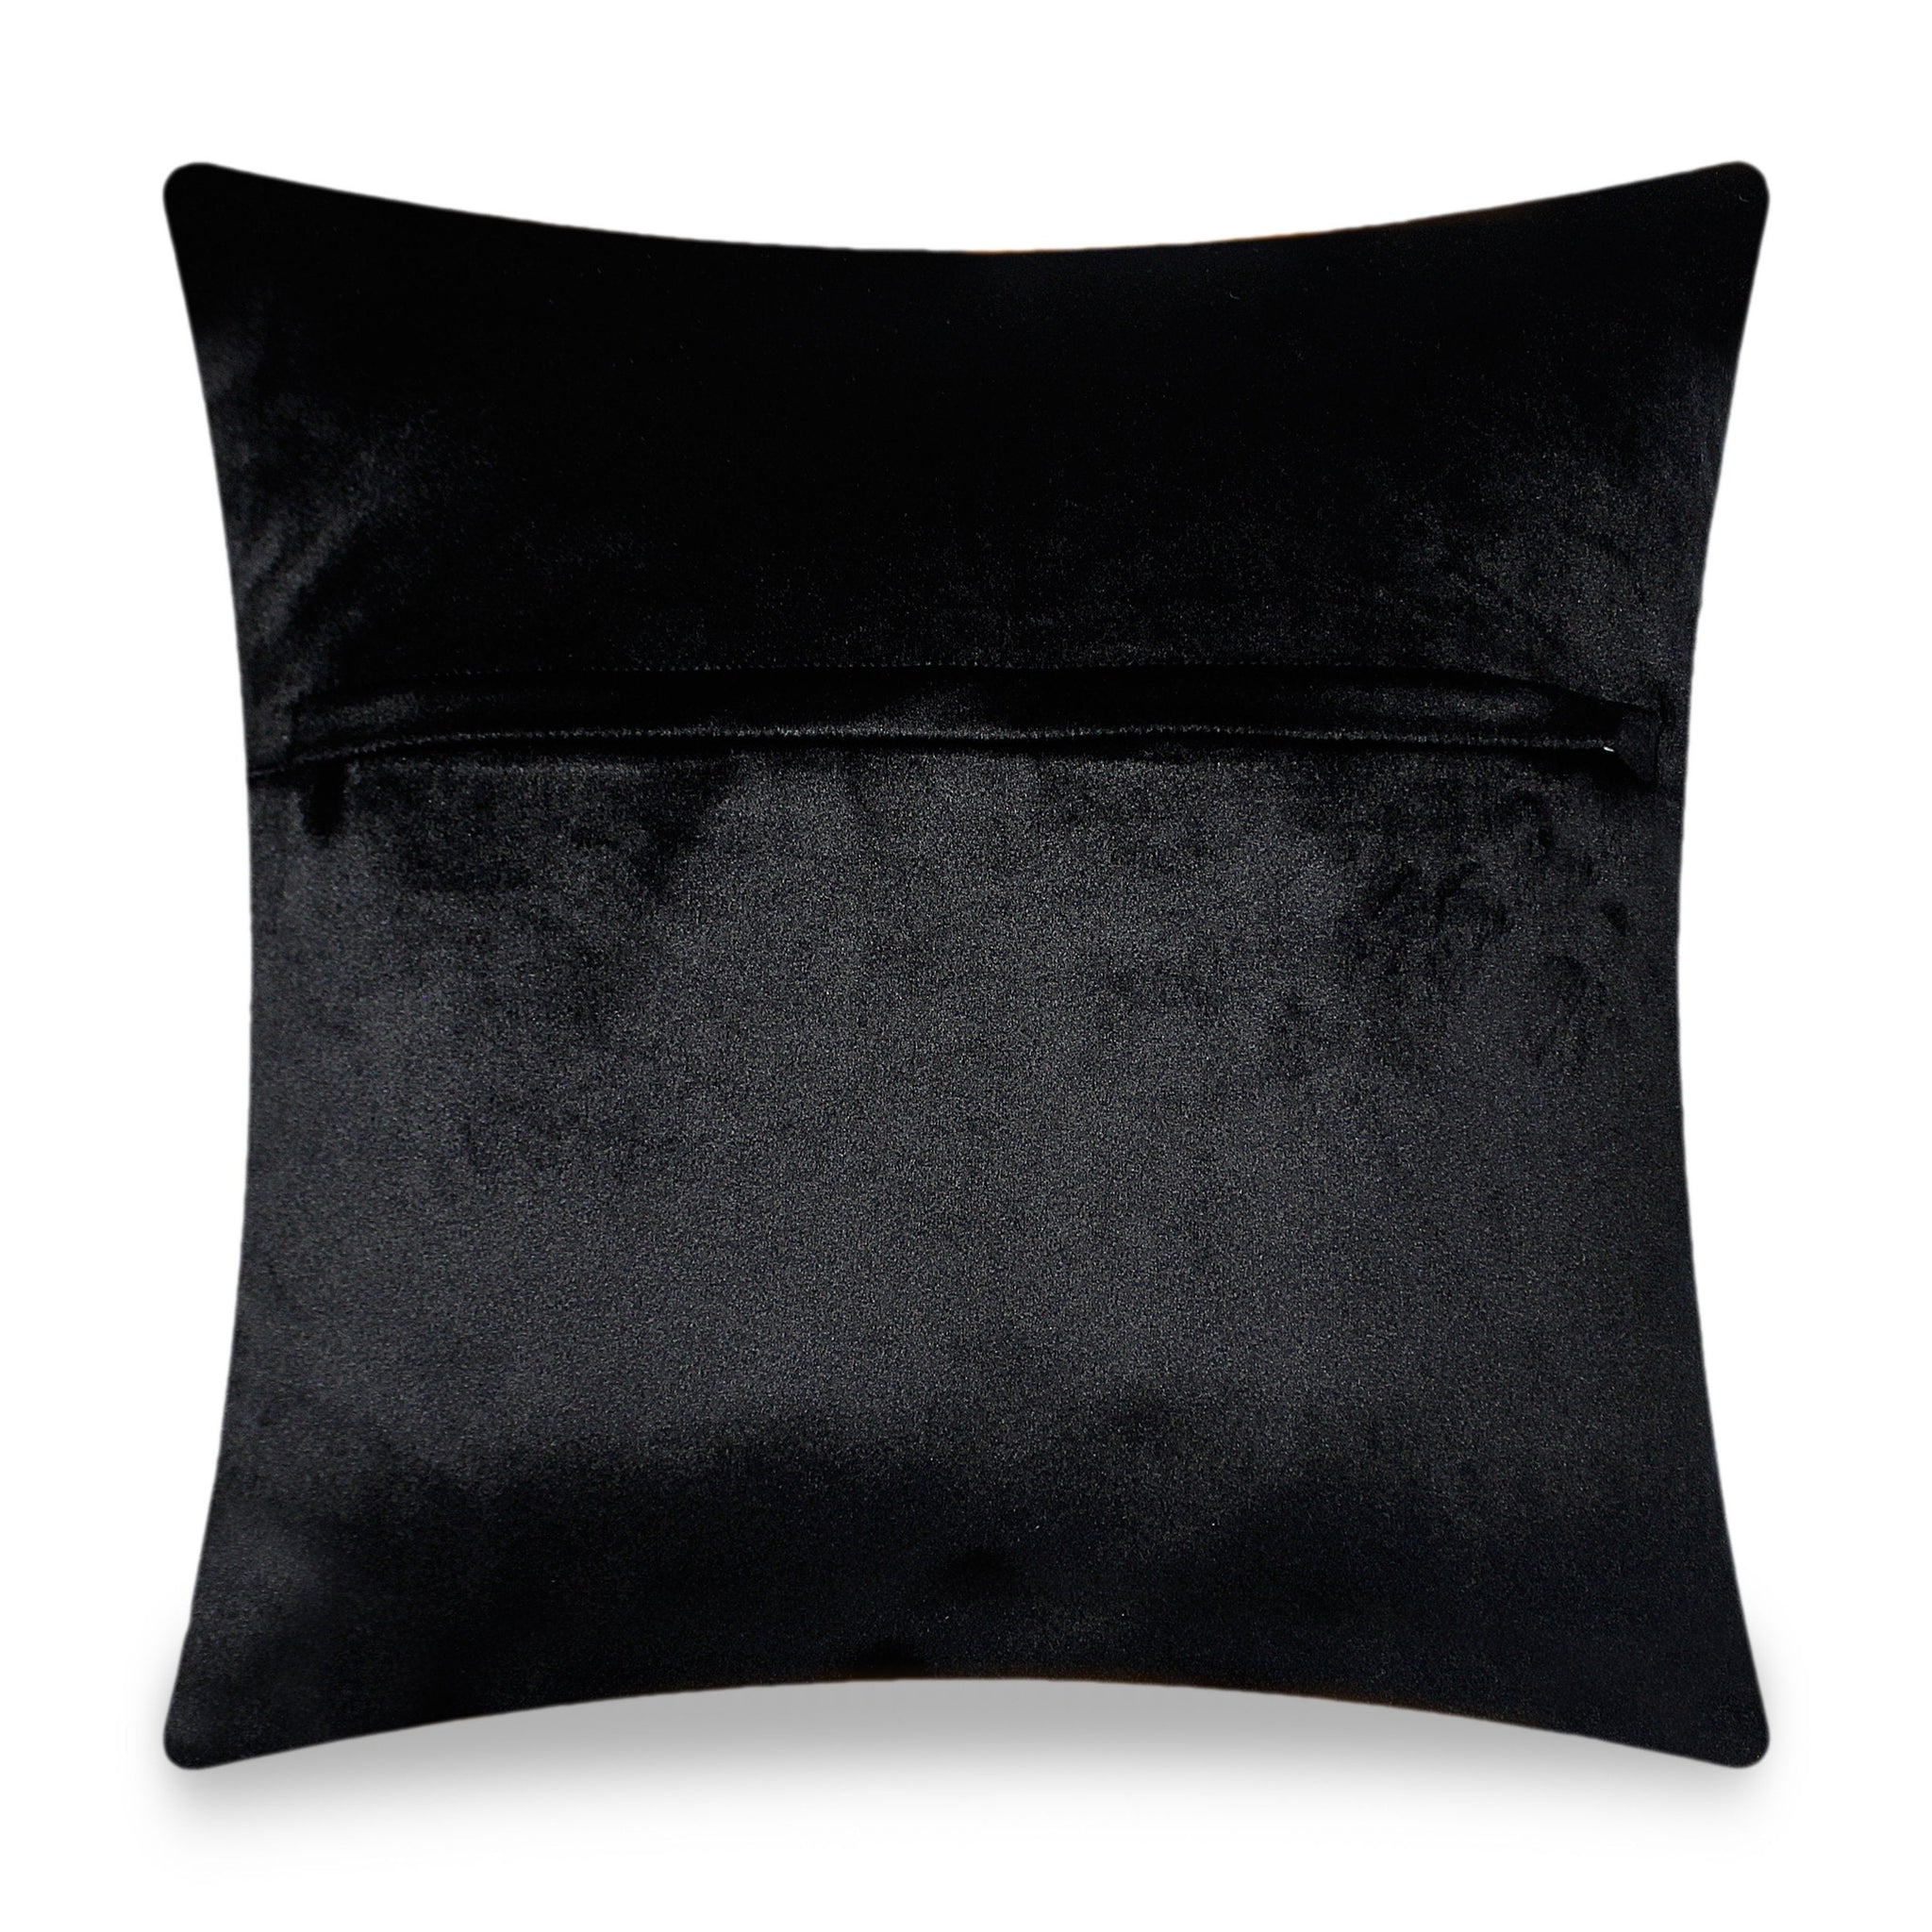 Black Velvet Cushion Cover Baroque Arch Decorative Pillowcase Home Decor Throw Pillow for Couch Sofa Chair Living Room 45x45 cm 18x18 In